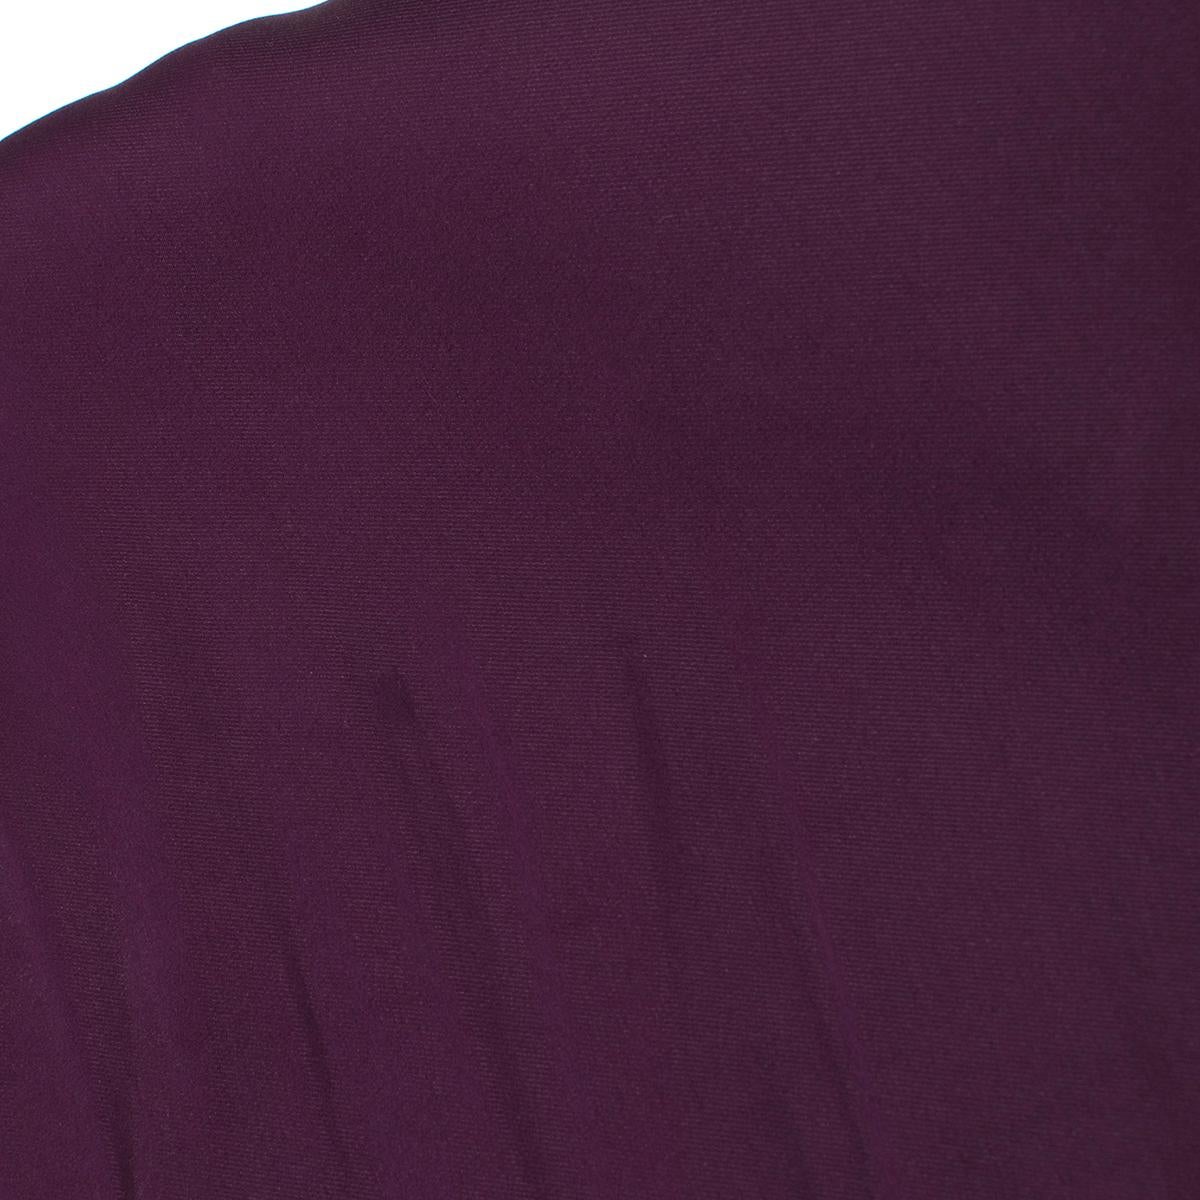 Lanvin Purple Ruffled Silk Blend Duchesse & Lace Dress estimated size M 3